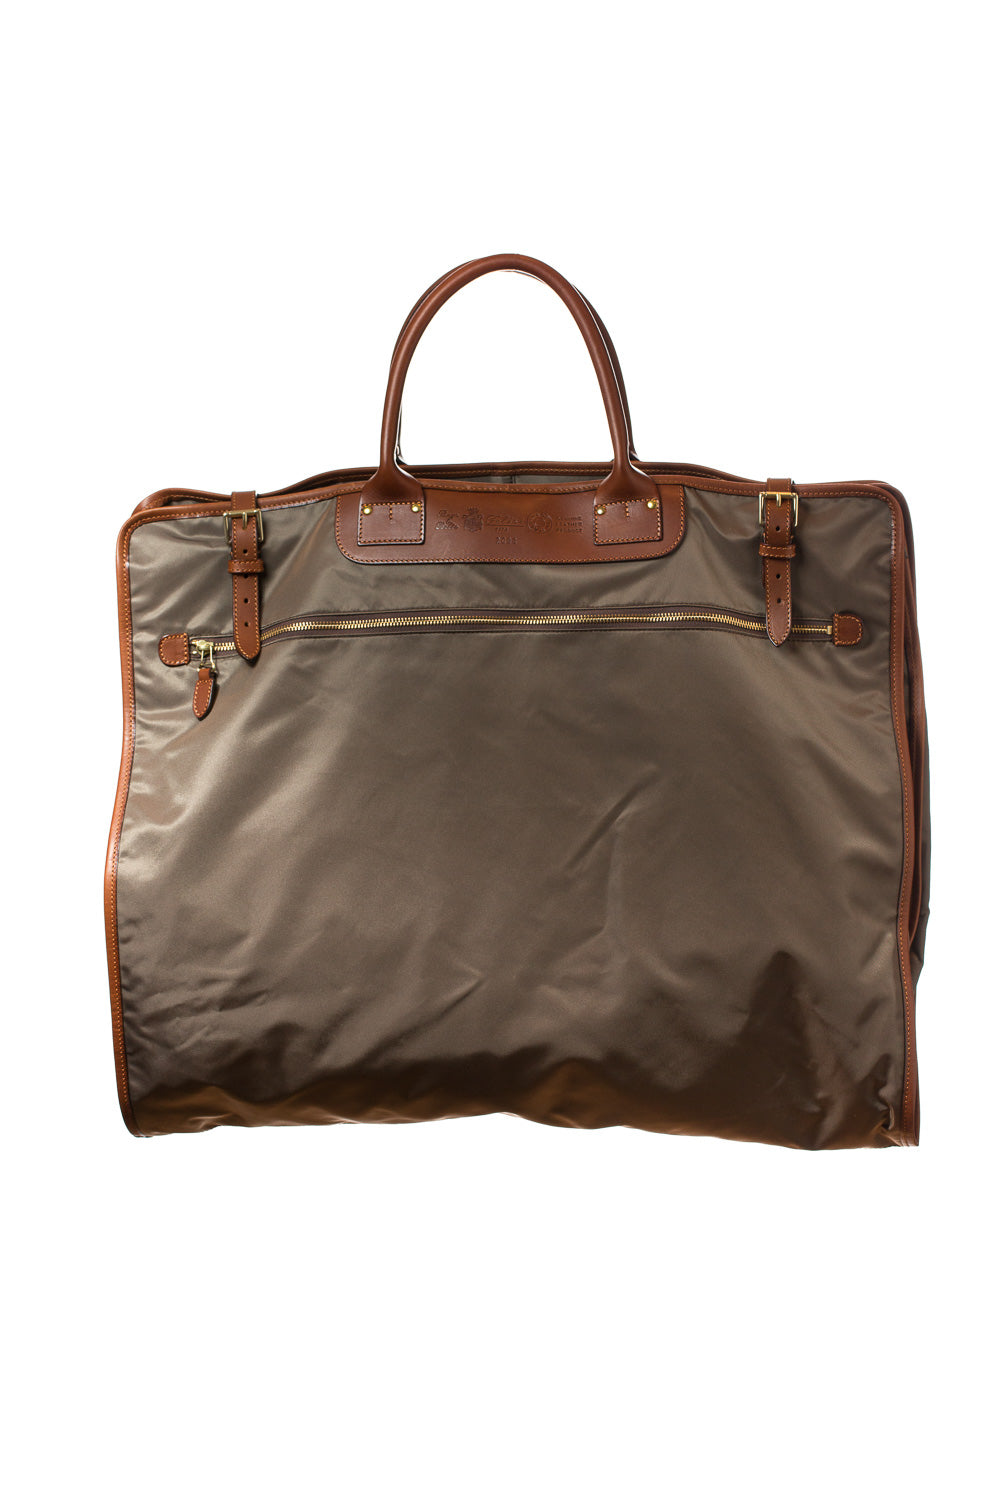 Garment bag Traveller made of Felisi nylon and saddle leather